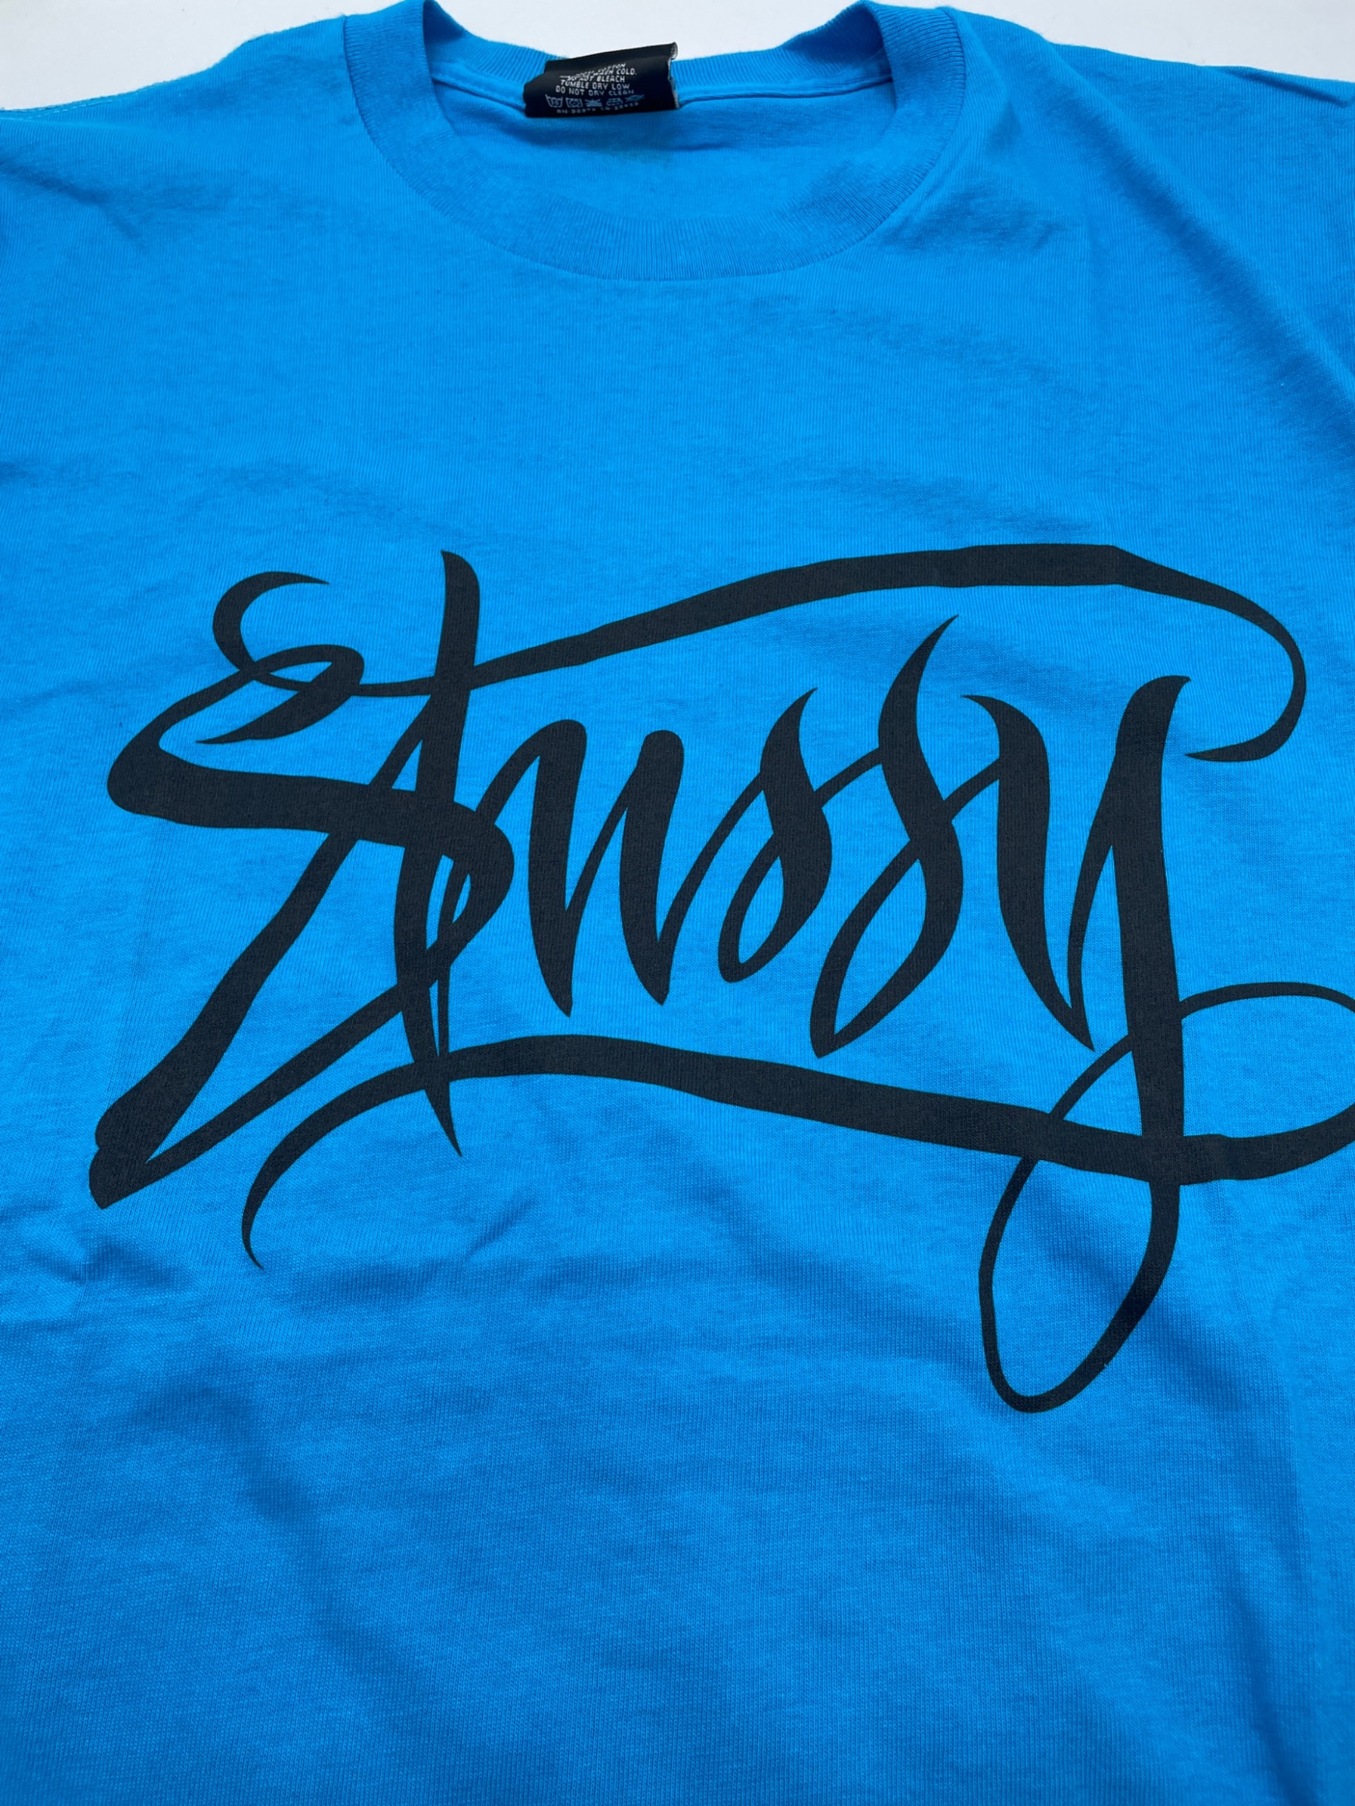 stussy (ステューシー) NEIGHBORHOOD (ネイバーフッド) Tシャツ ブルー サイズ:M